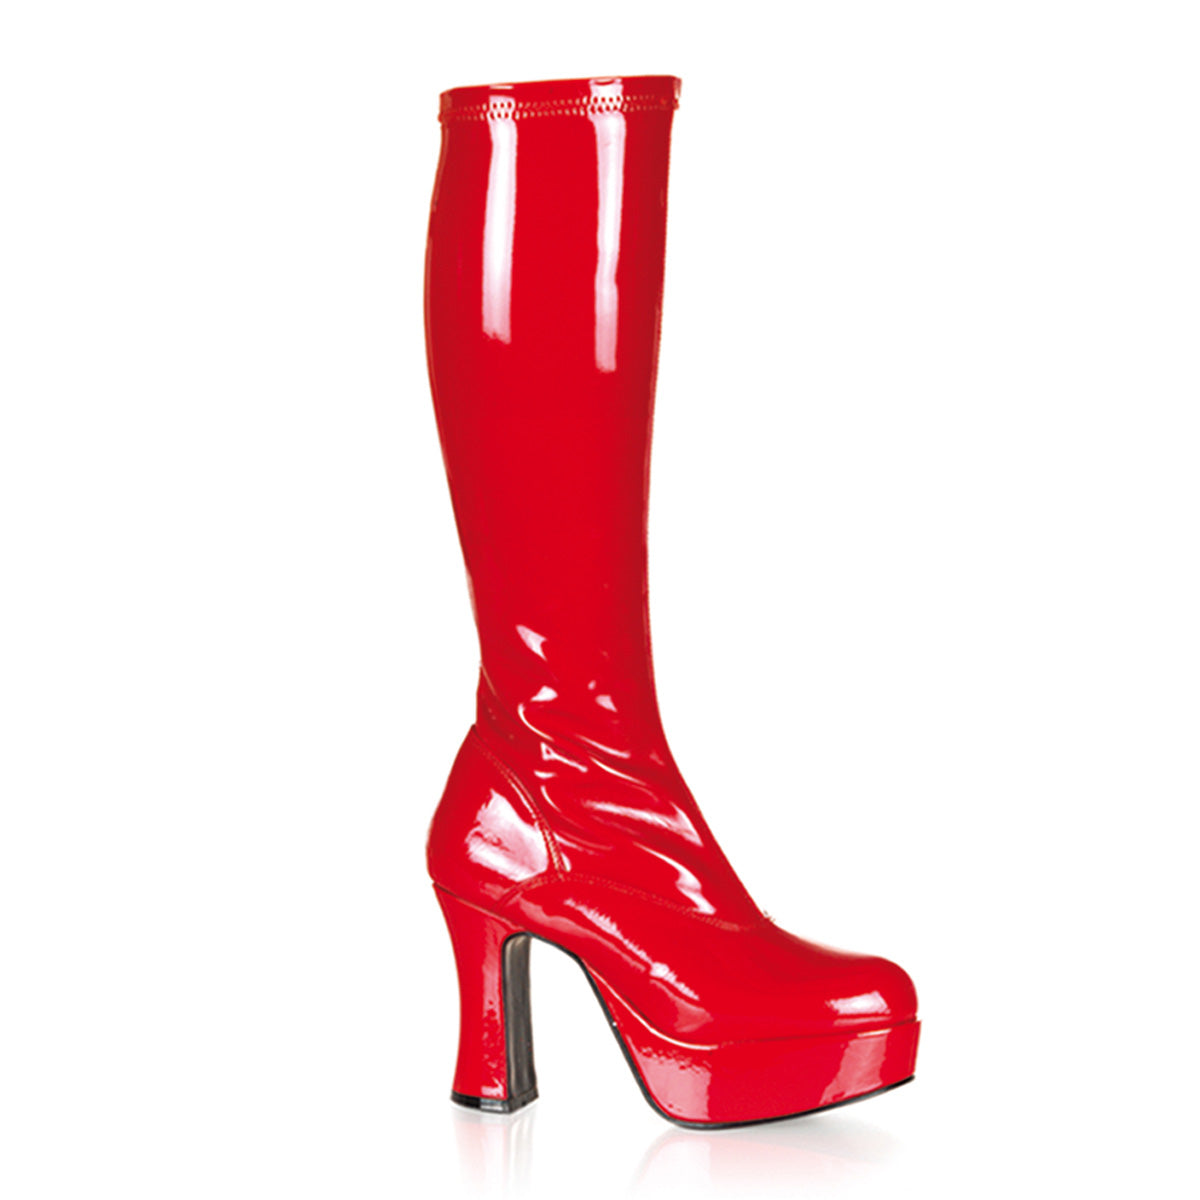 EXOTICA-2000 Funtasma 4 Inch Heel Red Women's Boots Funtasma Costume Shoes